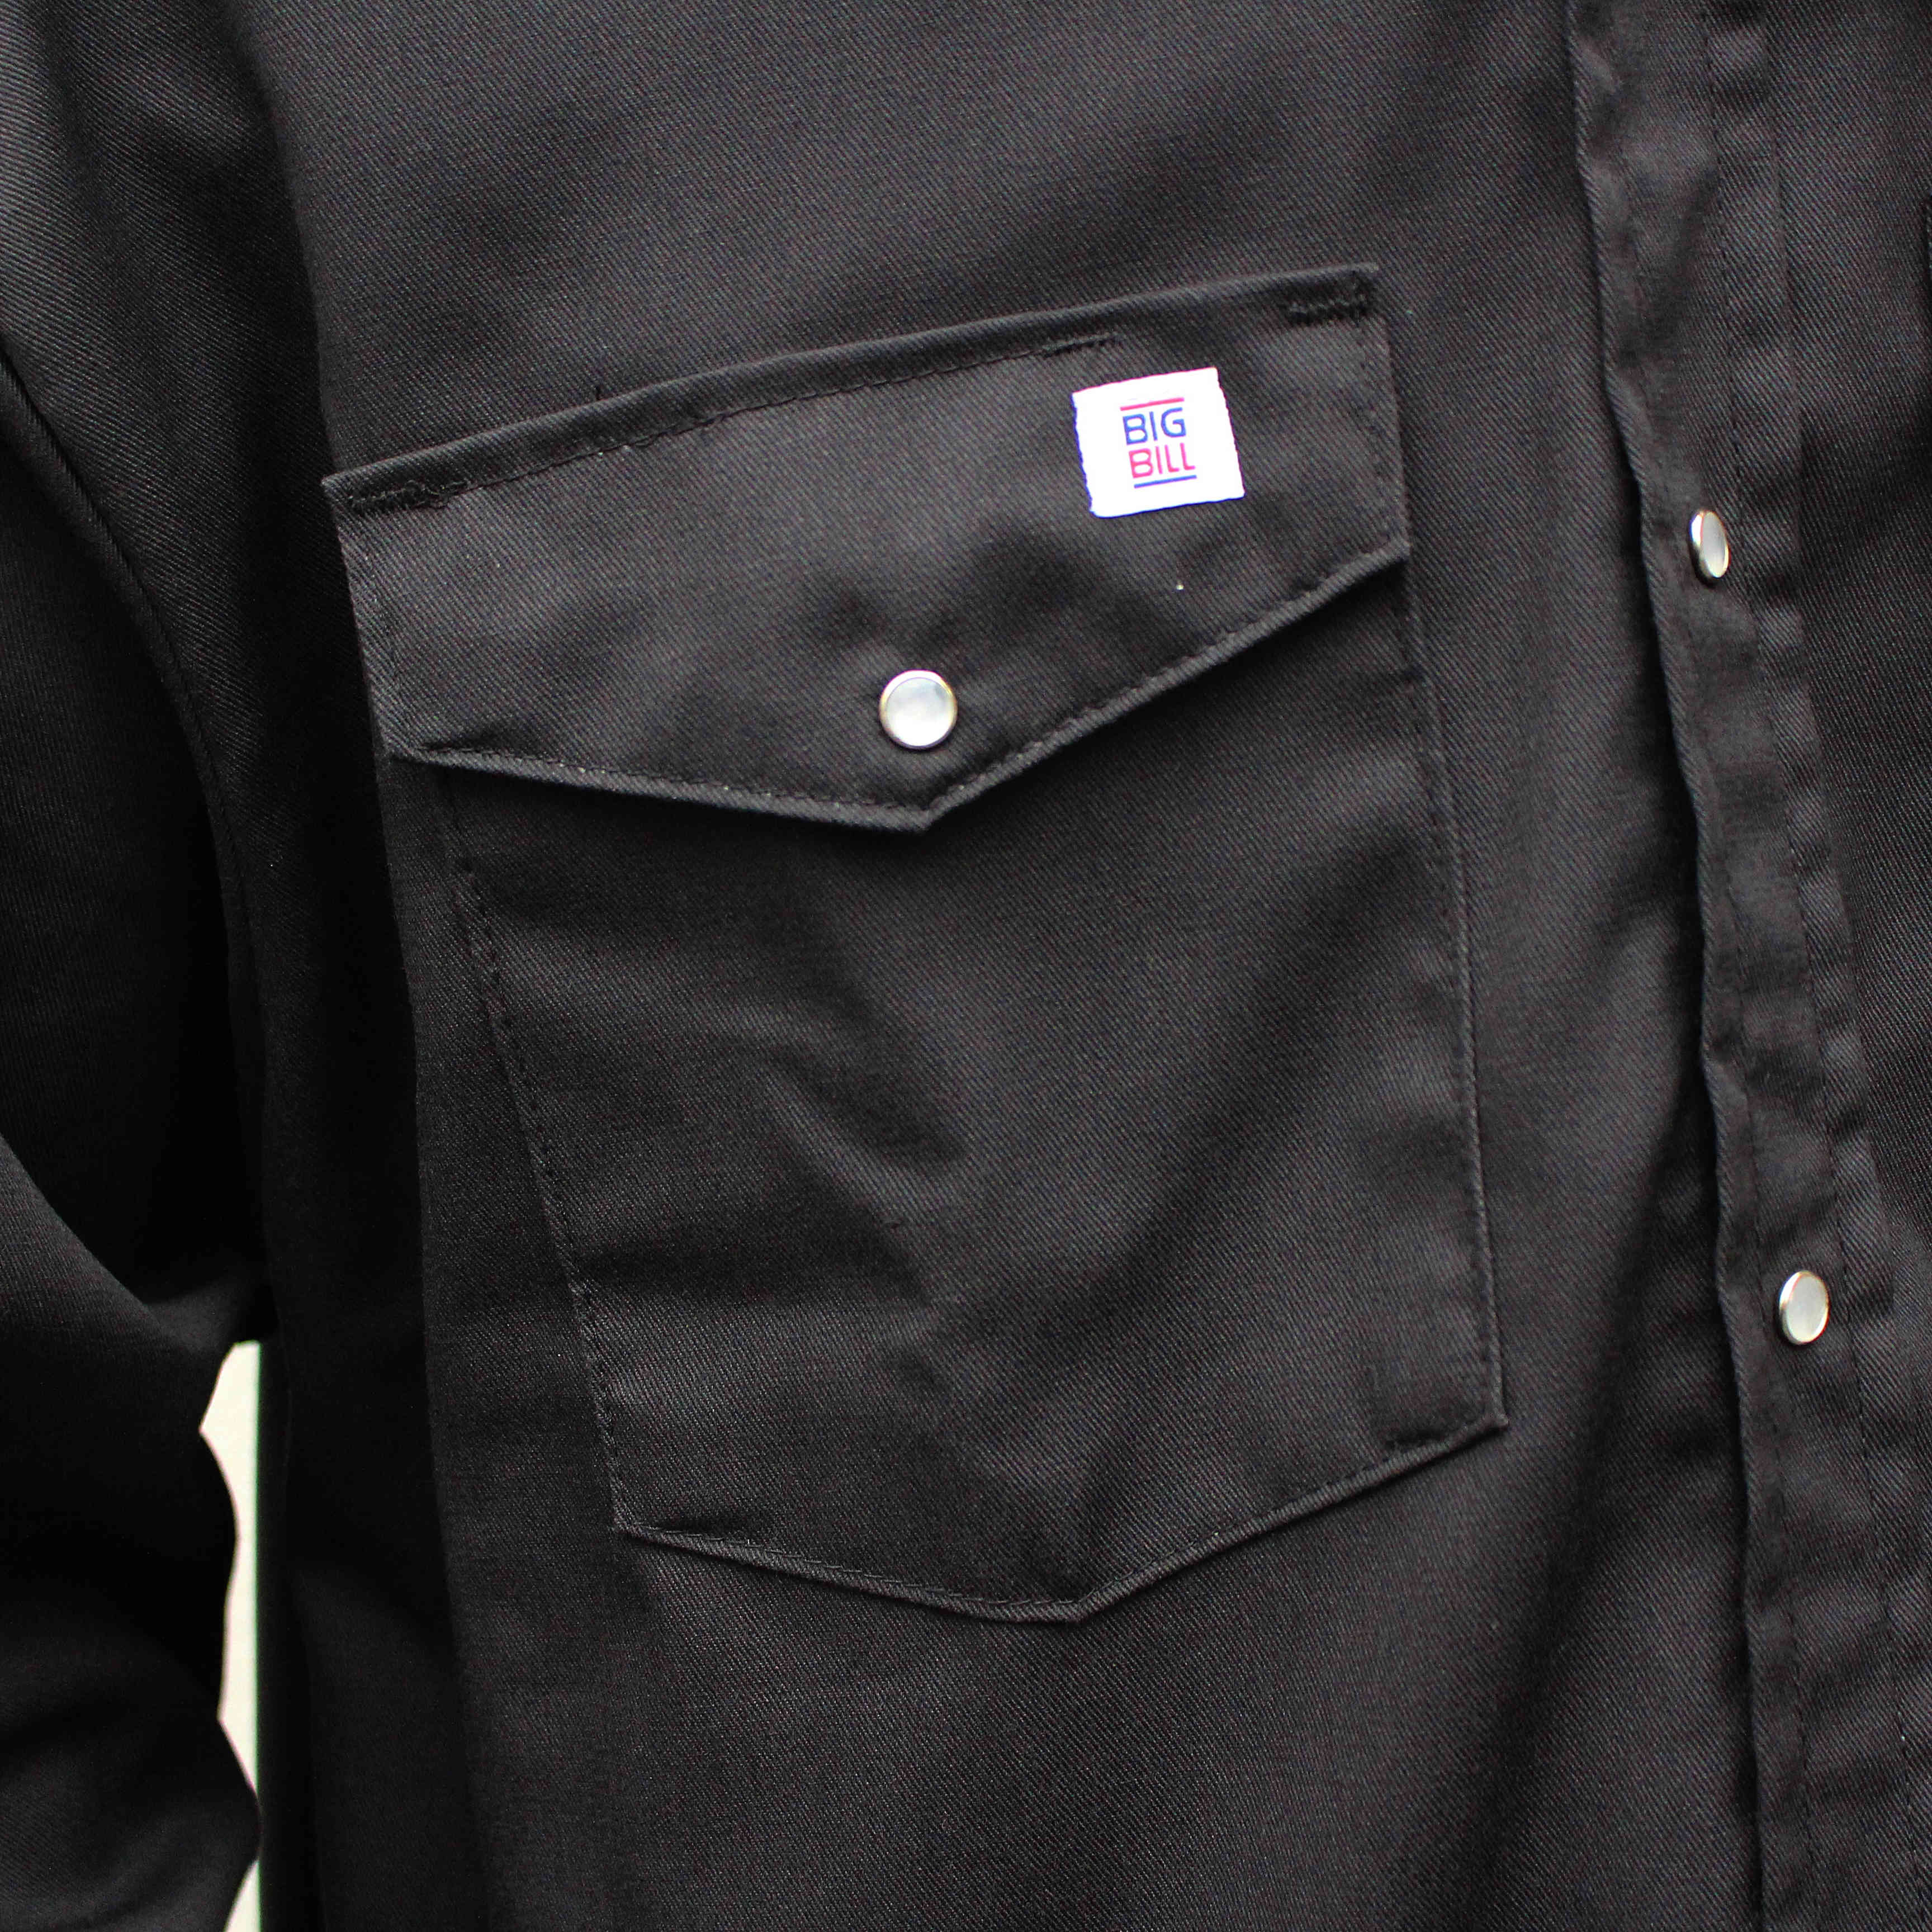 BIG BILL ビックビル / Premium Long Sleeve Snap Front Work Shirt 5